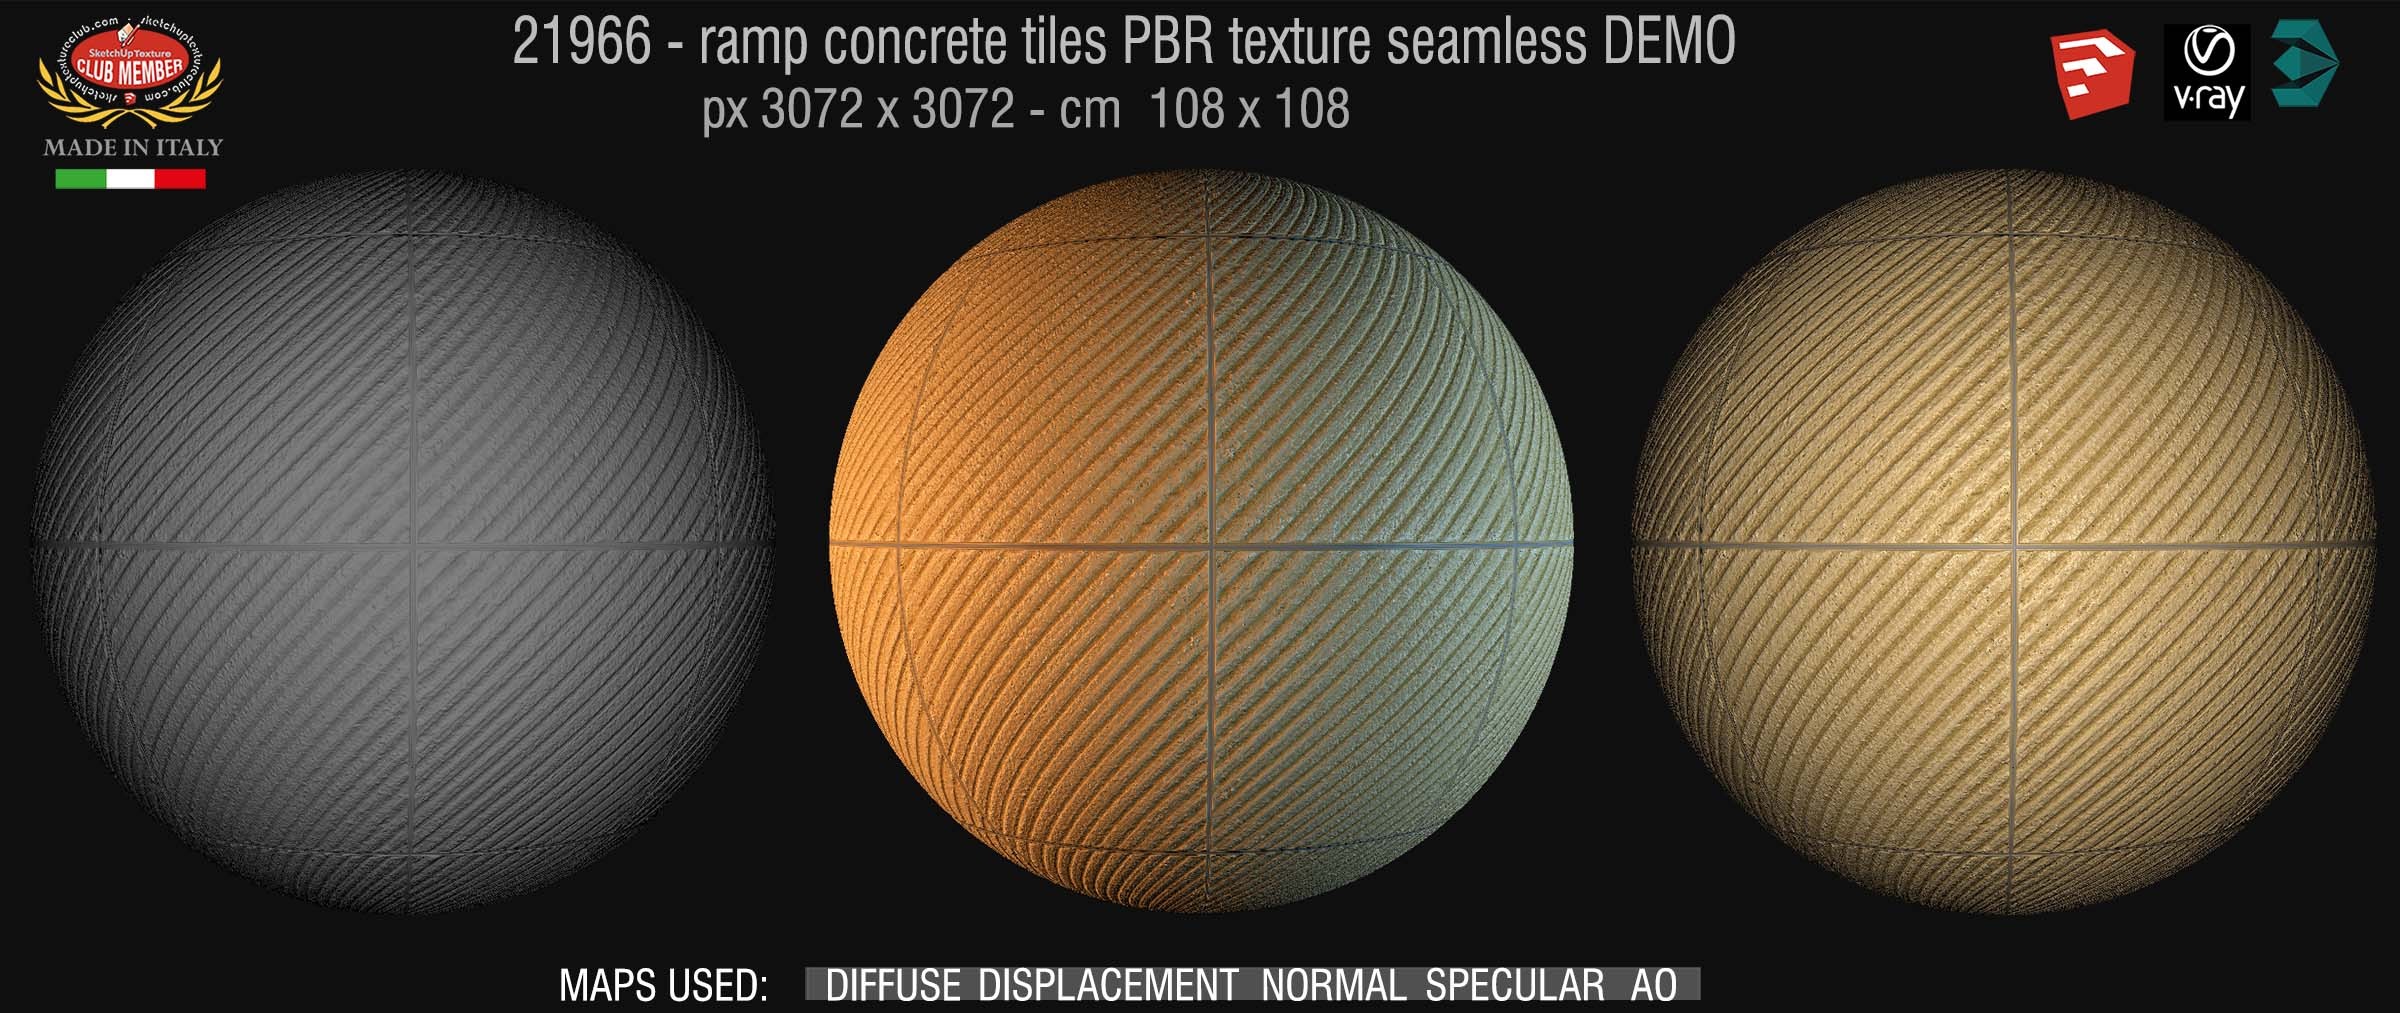 21966 Ramp concrete tiles PBR texture seamless DEMO